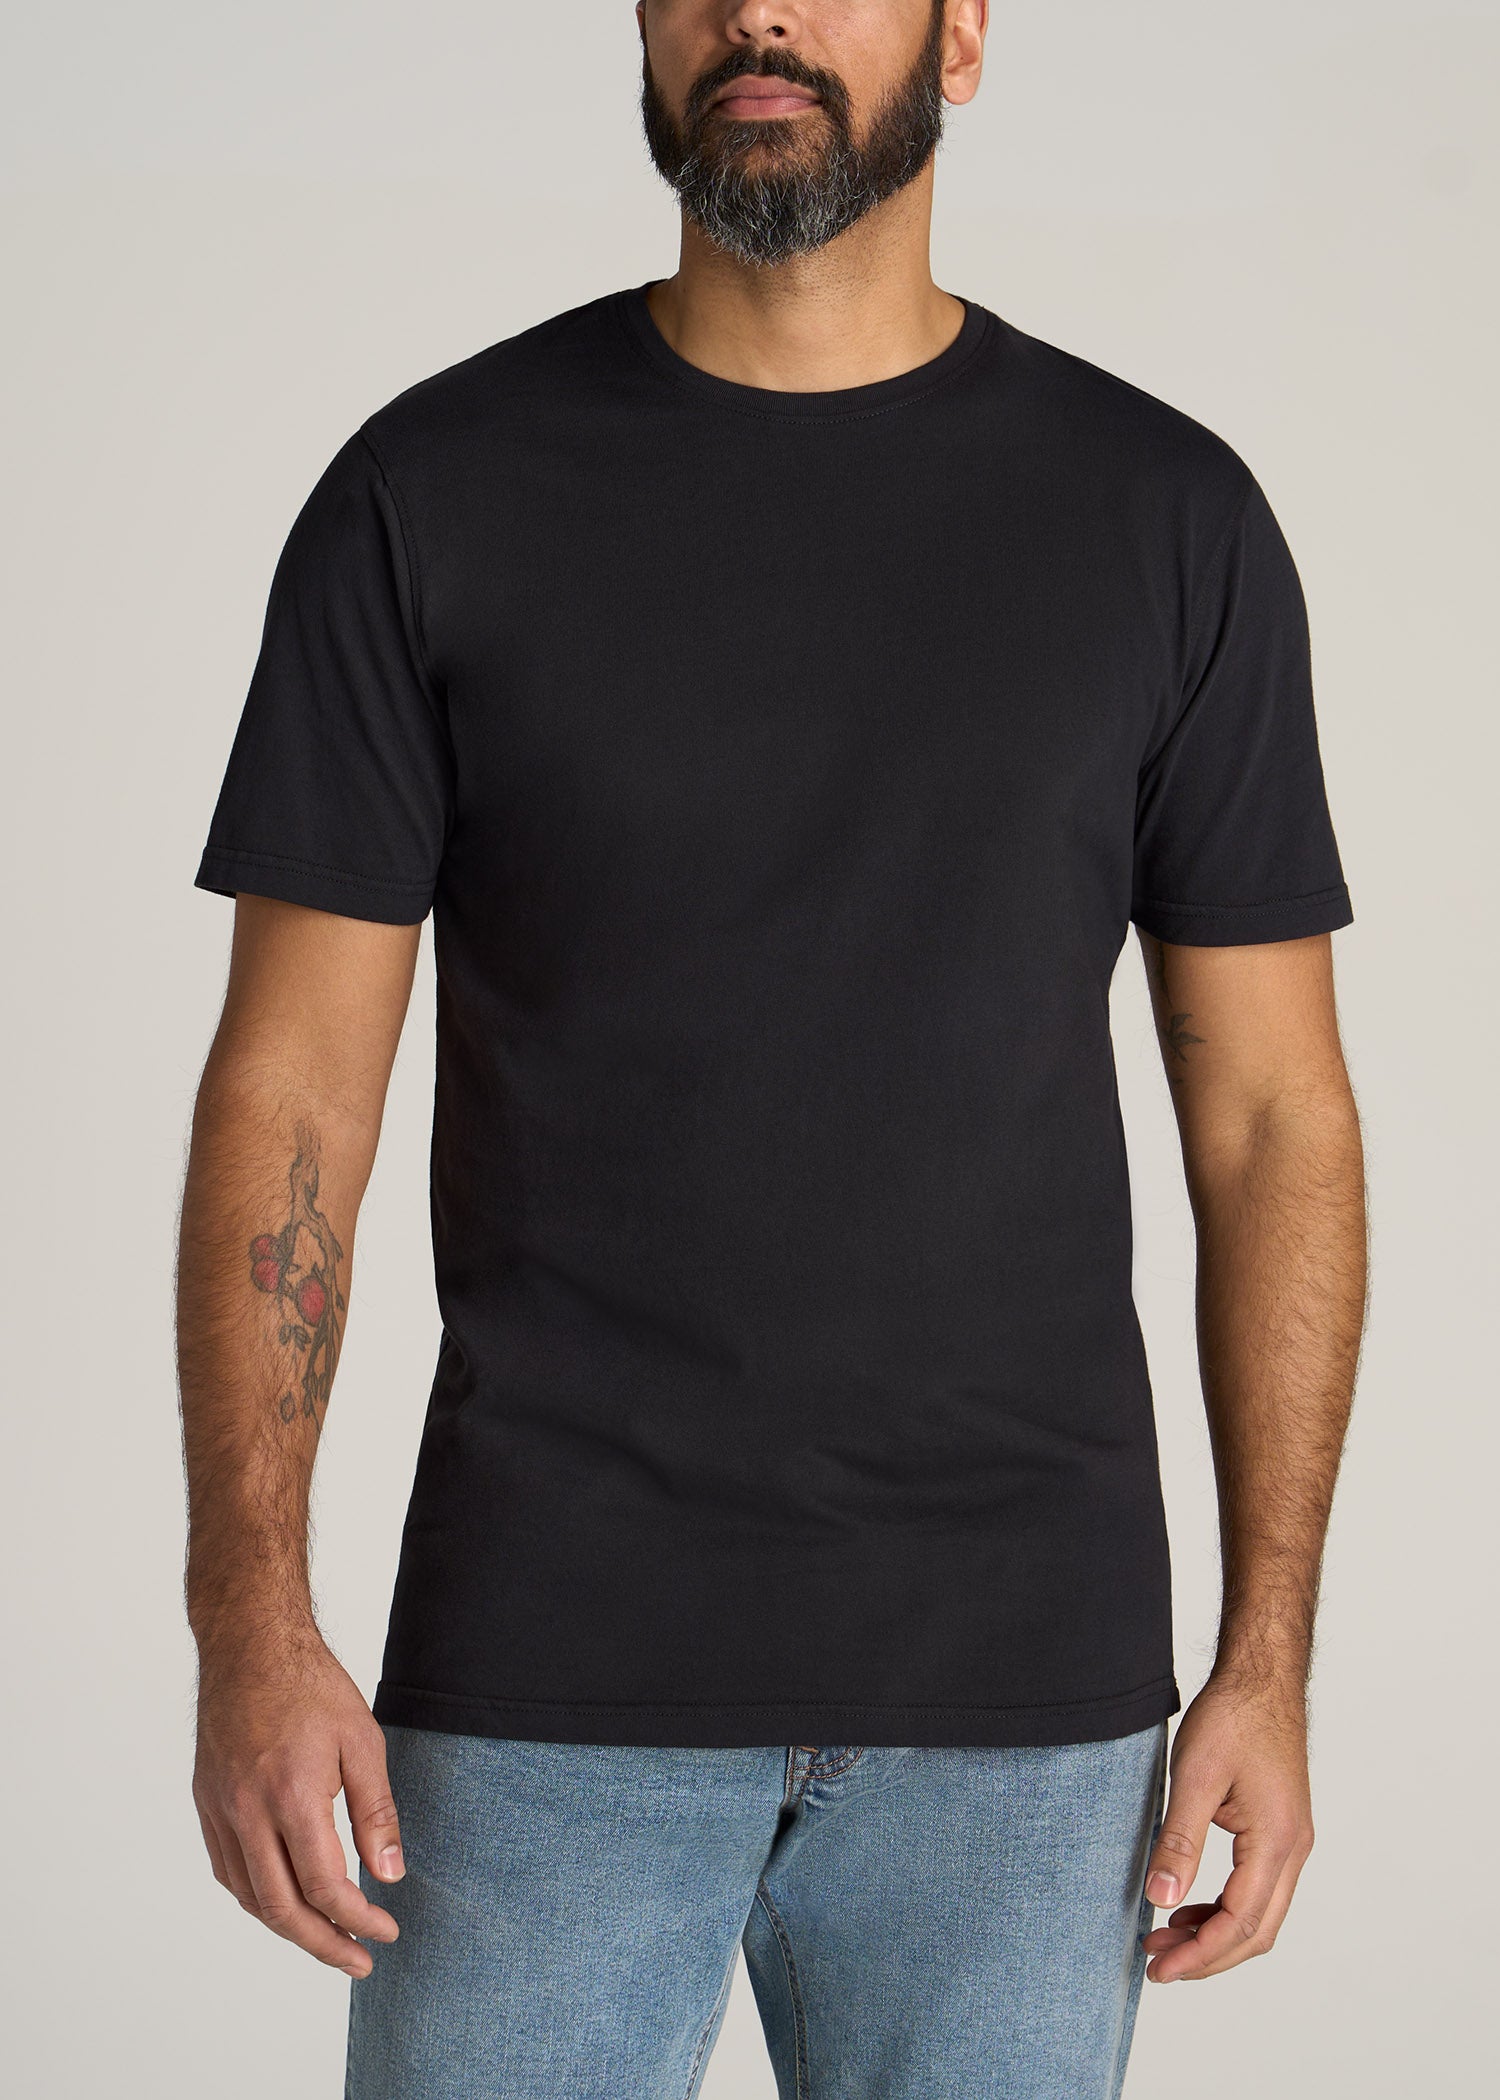 Regular Fit Crew-Neck T-shirt: LJ Crew Neck Short Sleeve Black Tee